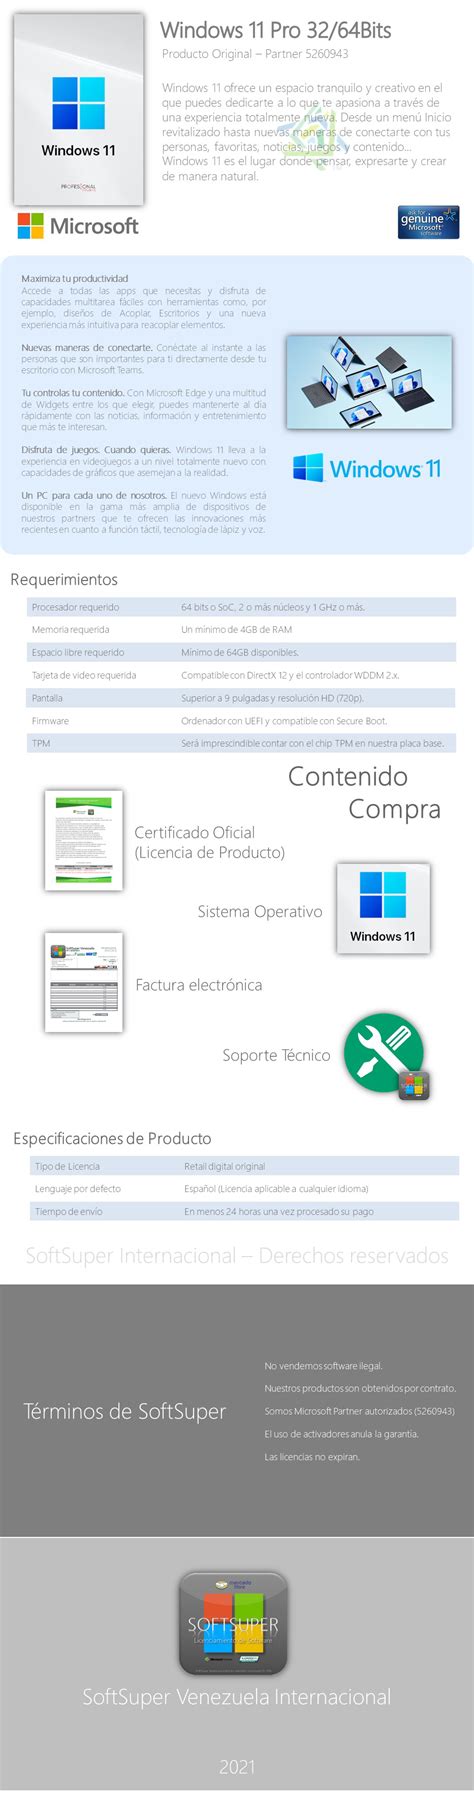 Windows 11 Pro 1pc Digital Original Reinstalable